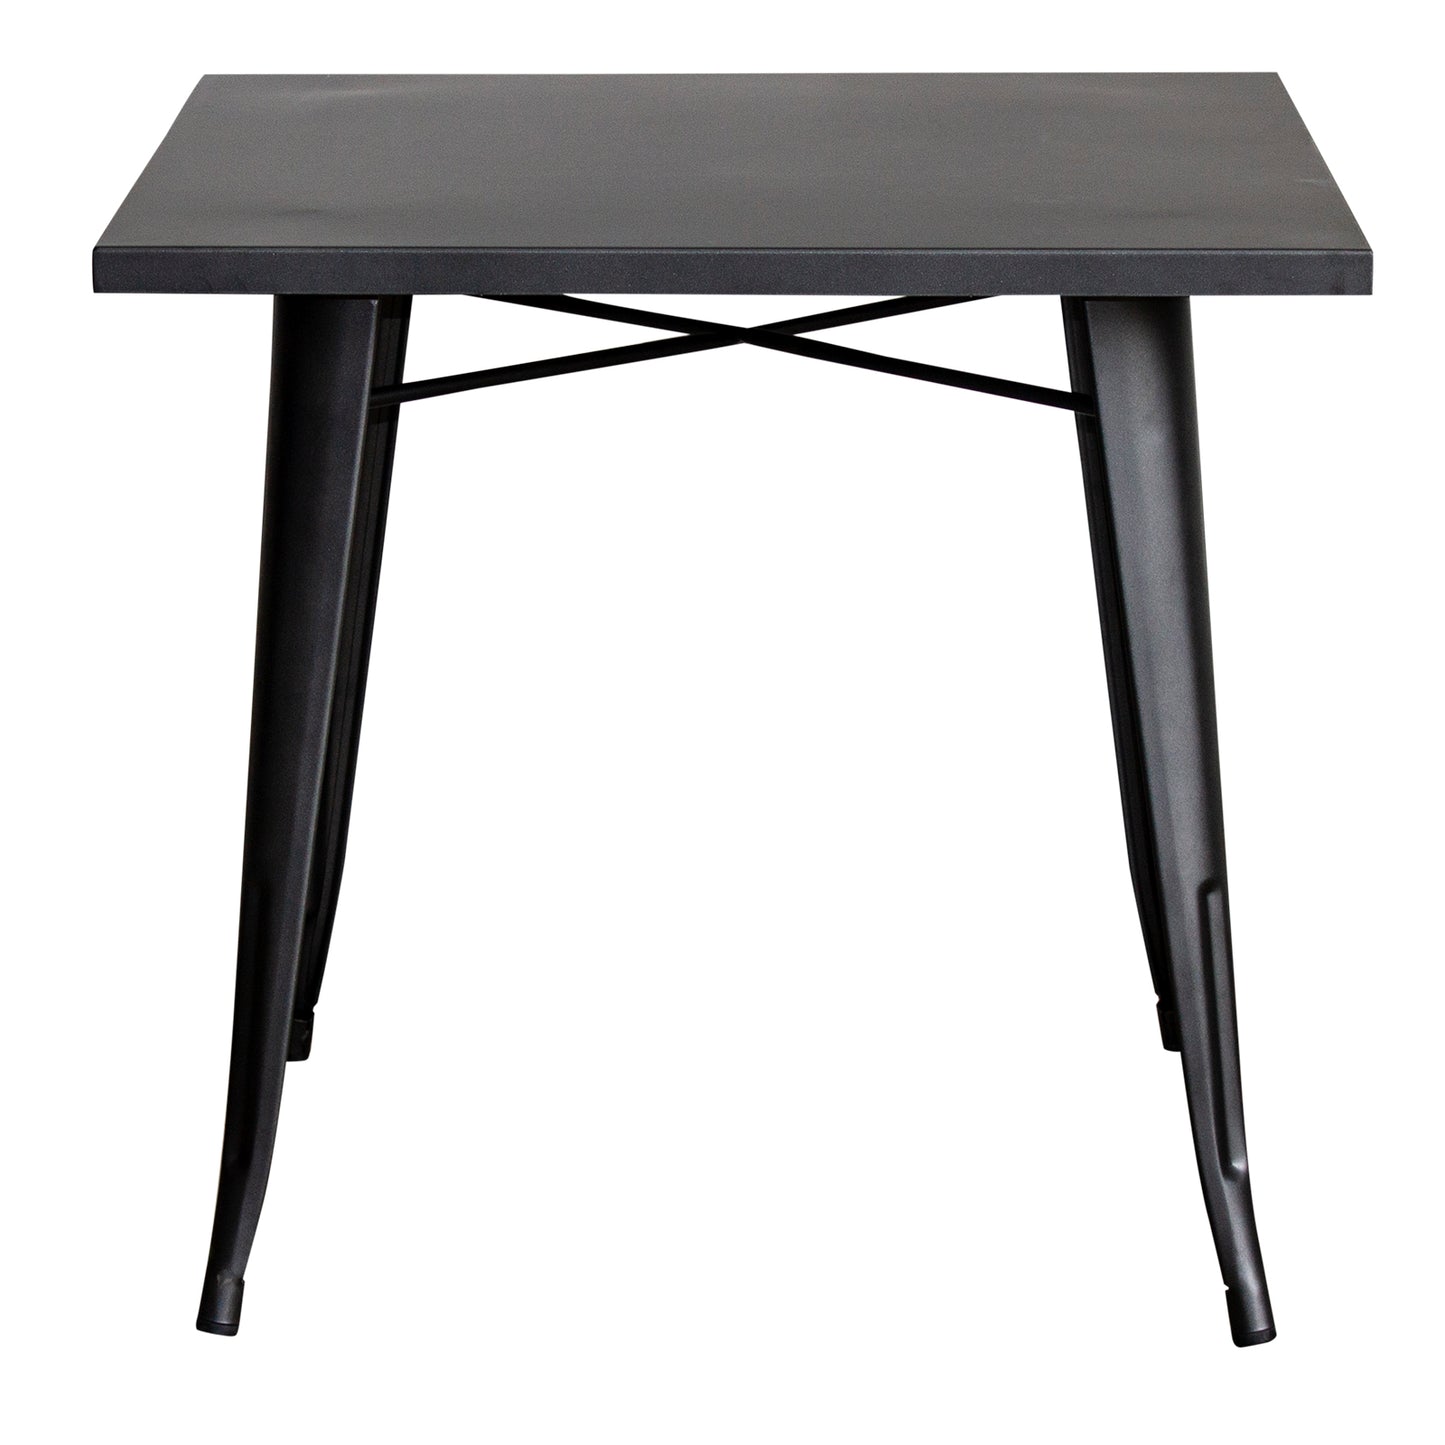 5PC Belvedere Table & Palermo Chair Set - Onyx Matt Black